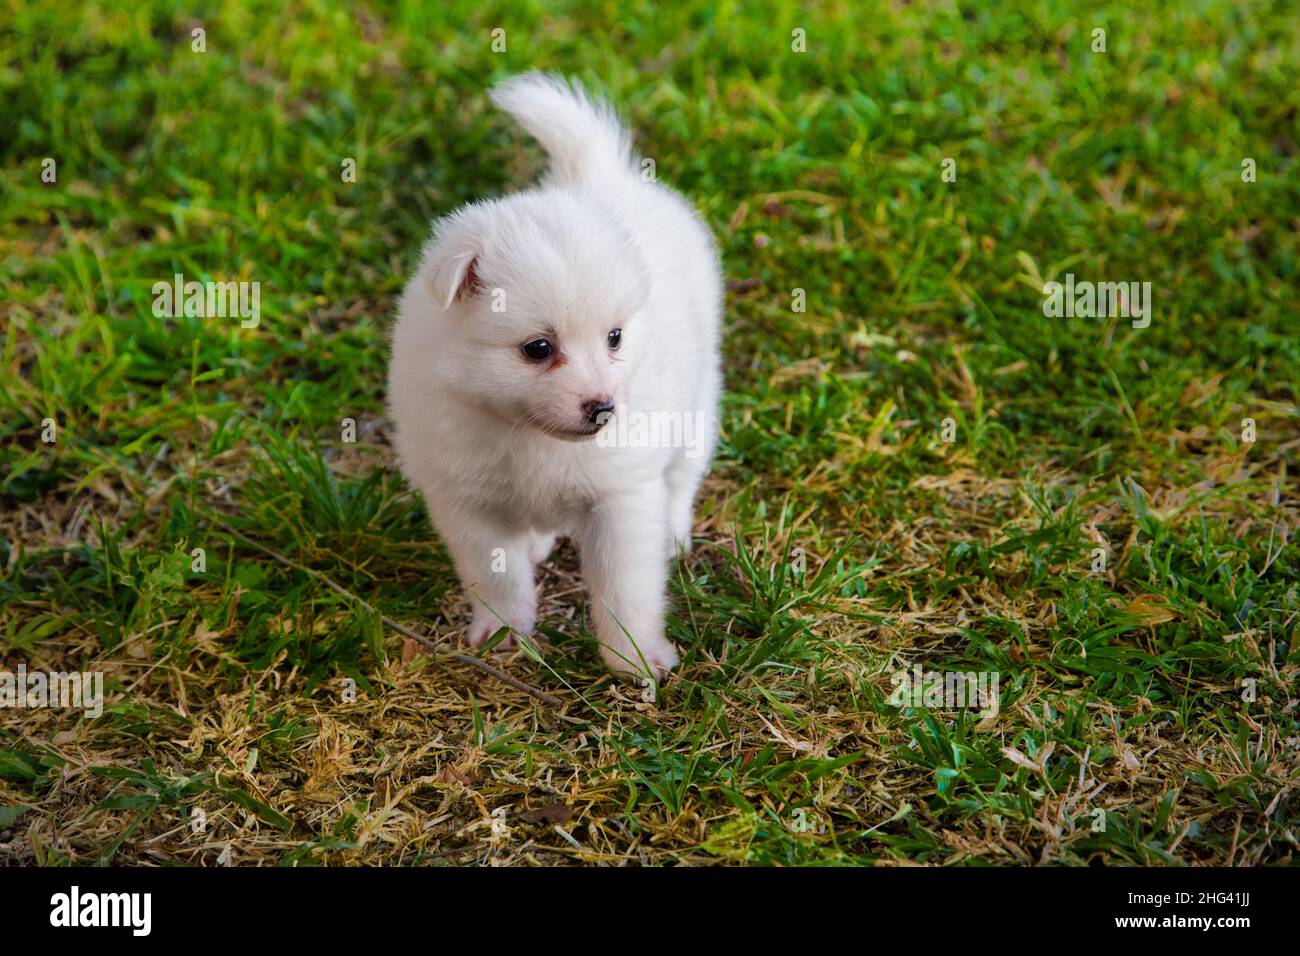 Japanische Spitz Welpen Hund Stockfotografie - Alamy